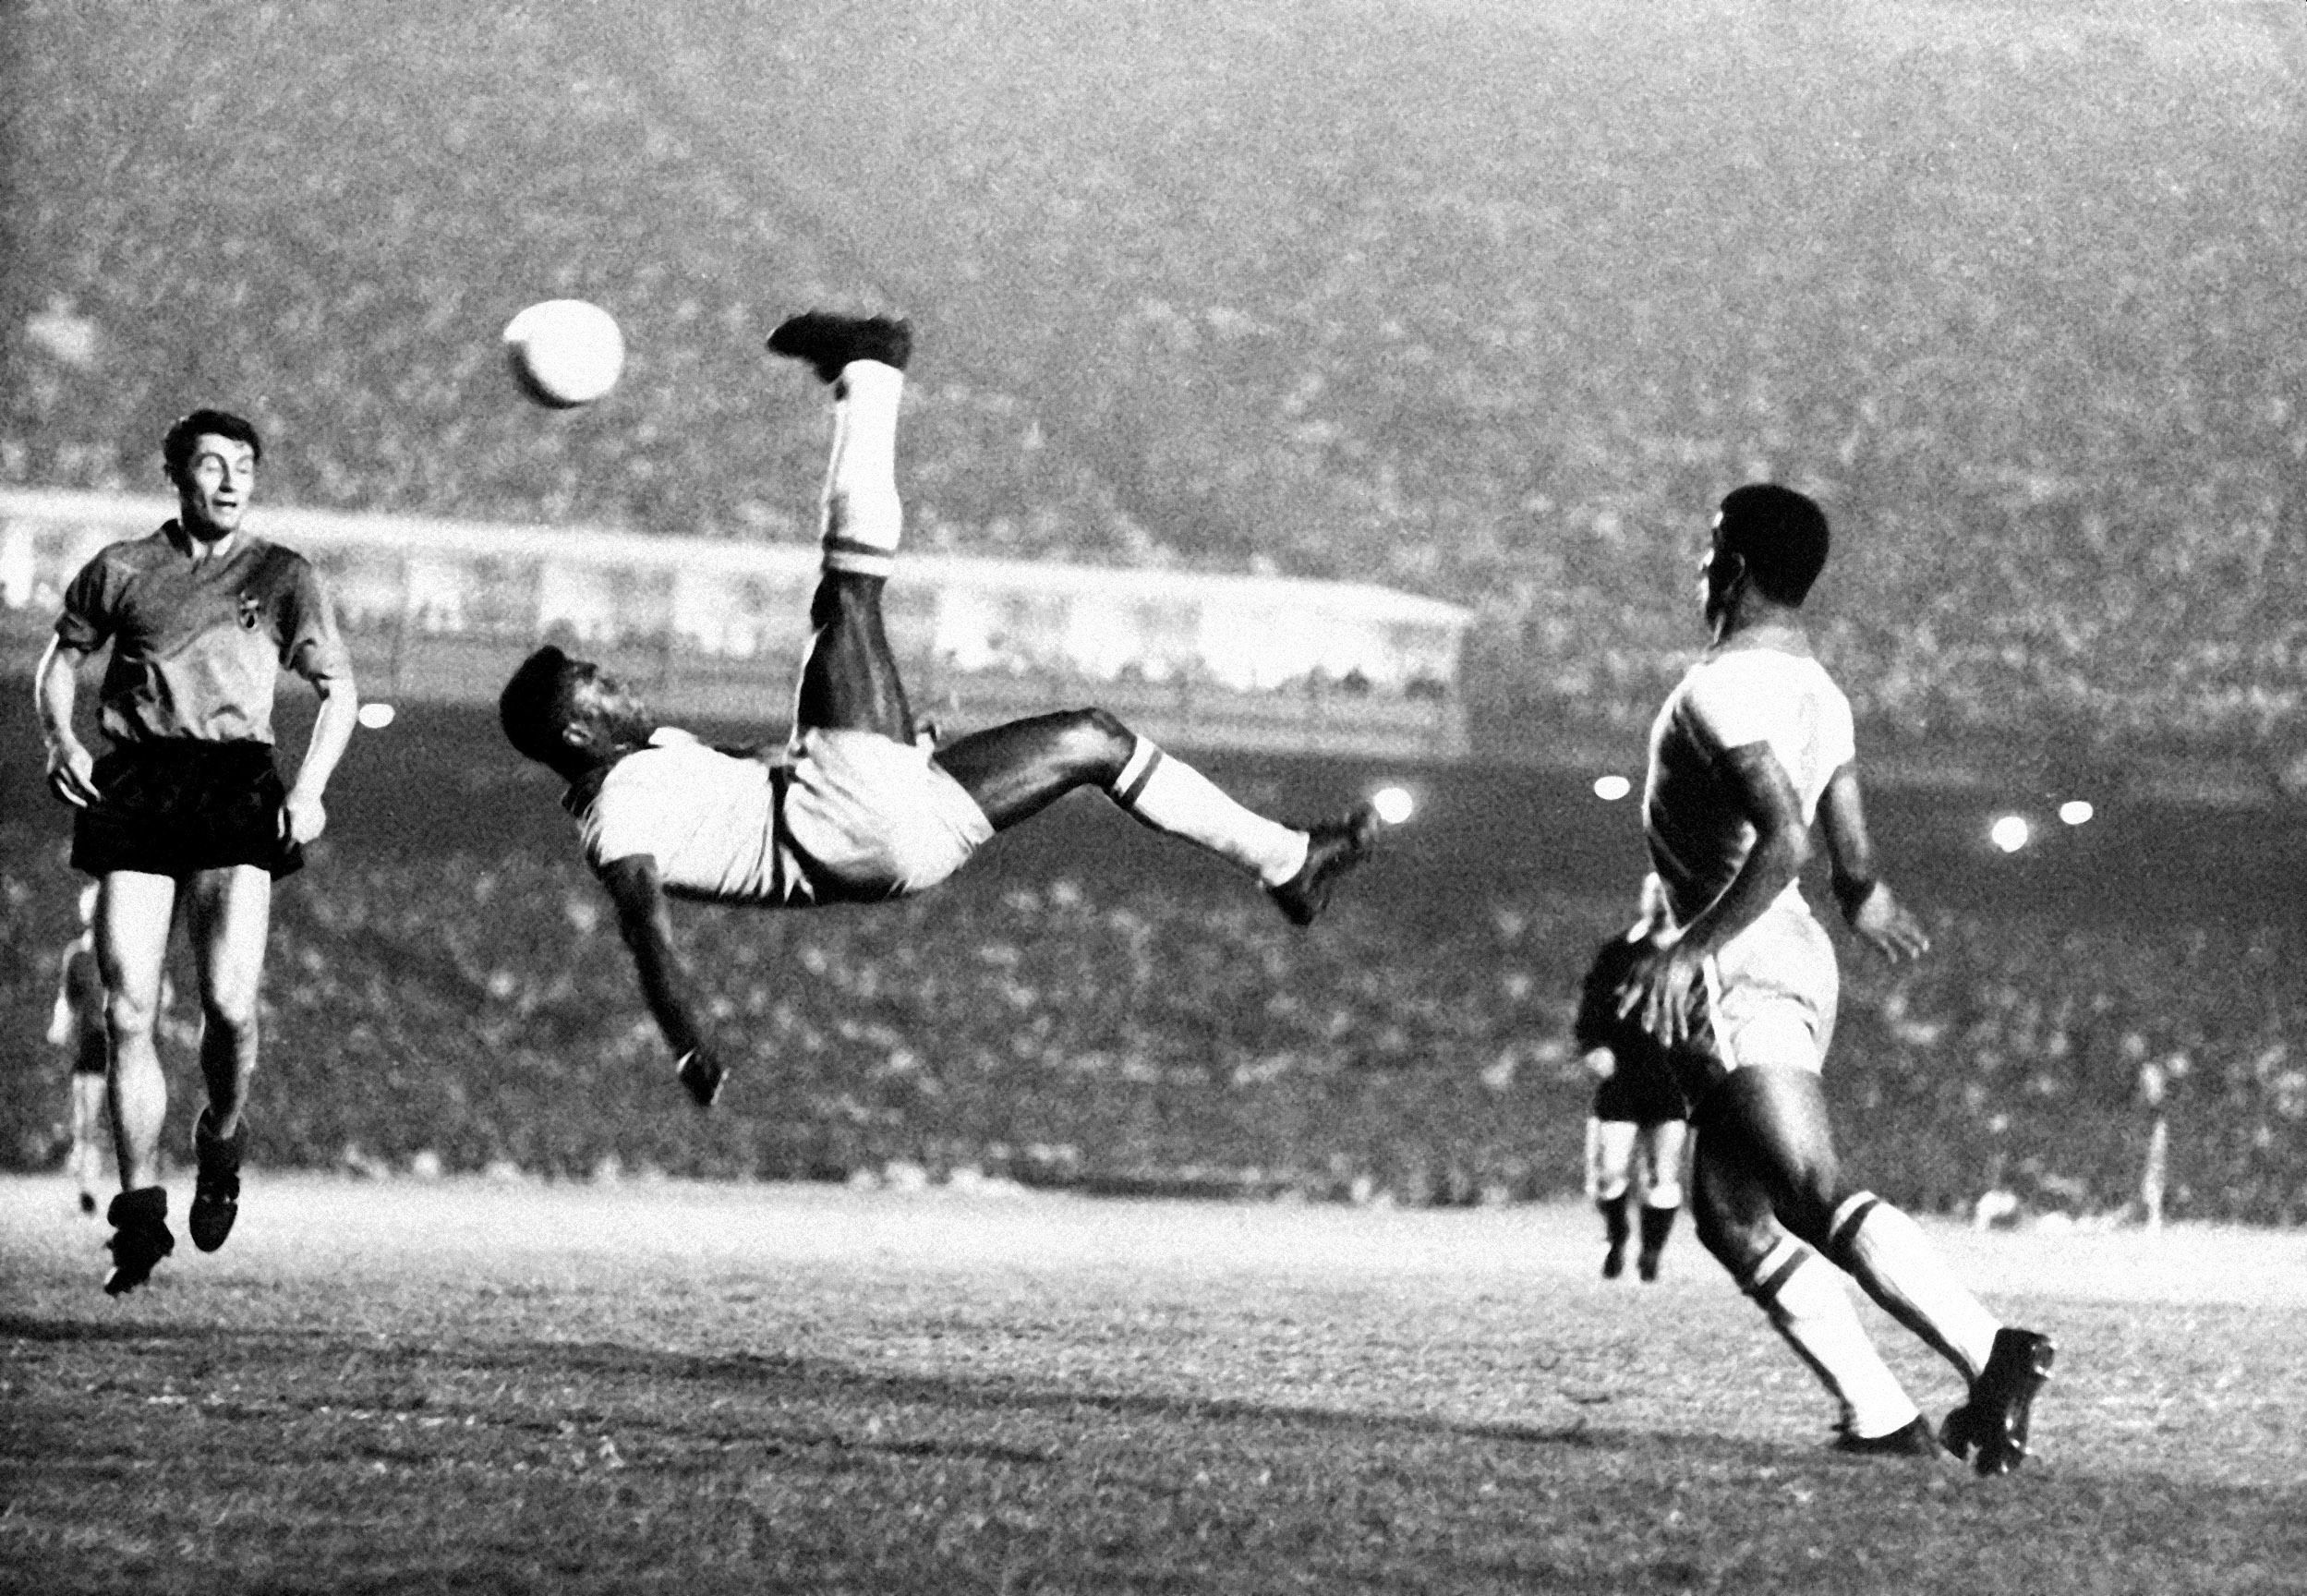 ESPN Stats & Info on X: Soccer legend Pelé turns 80 today. Here